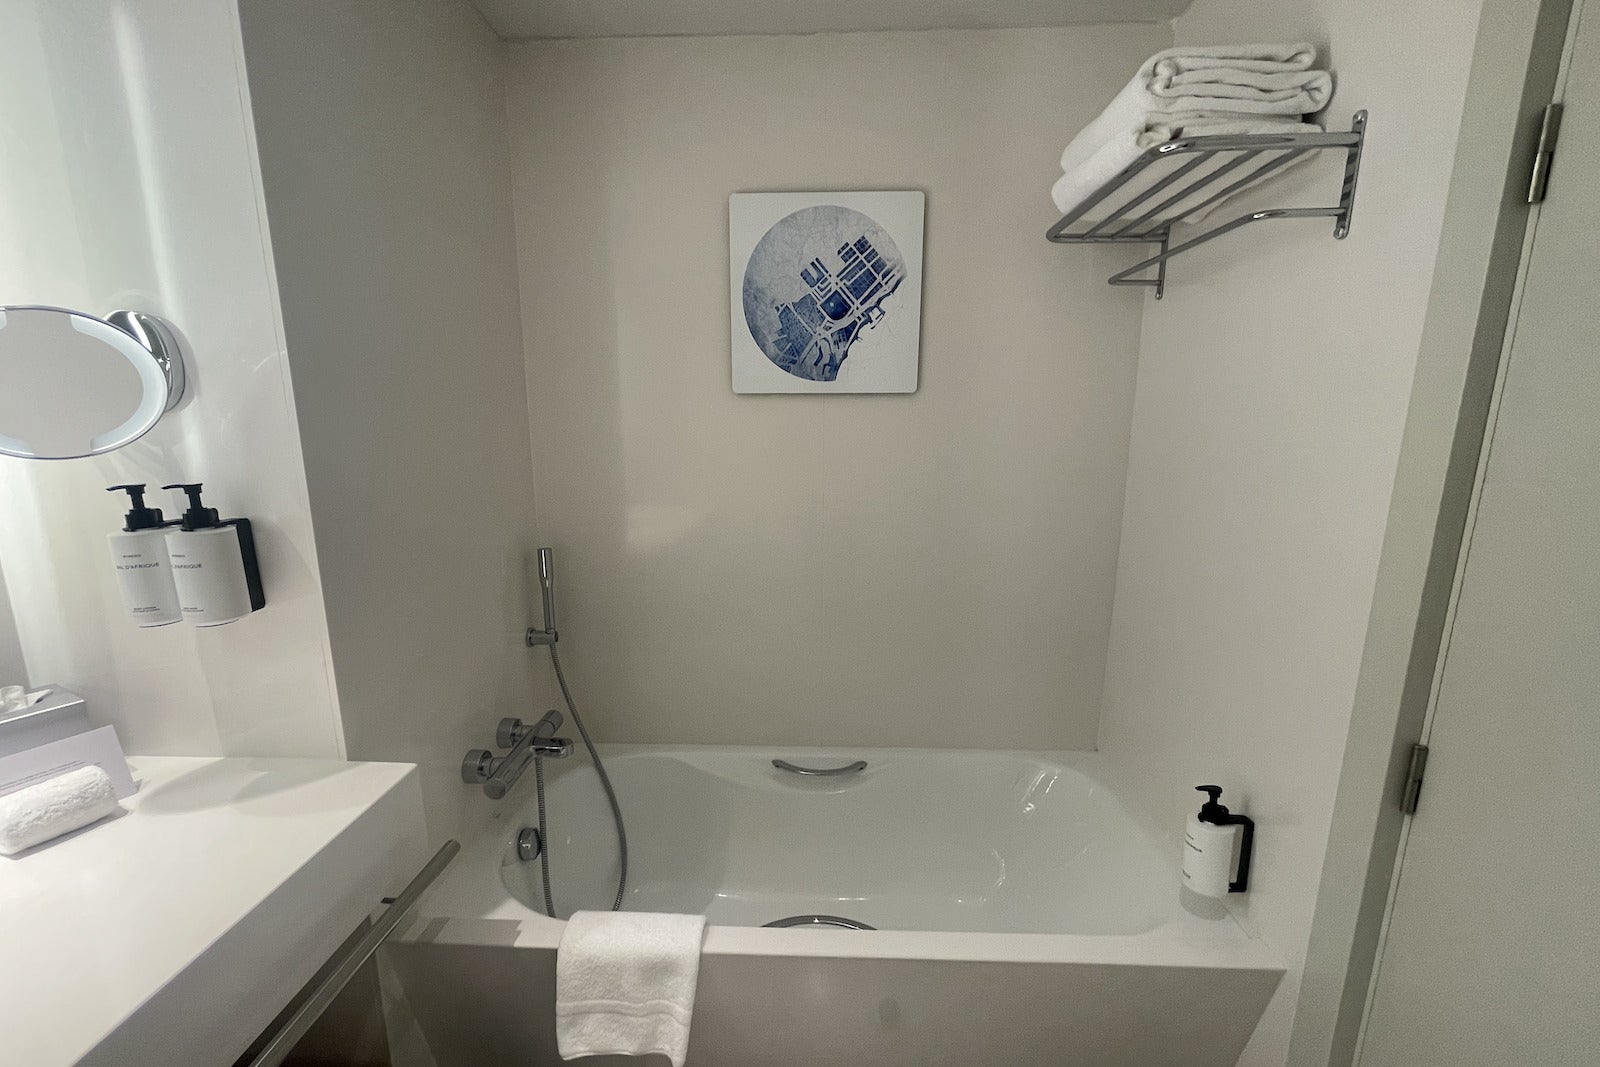 hotel bathroom